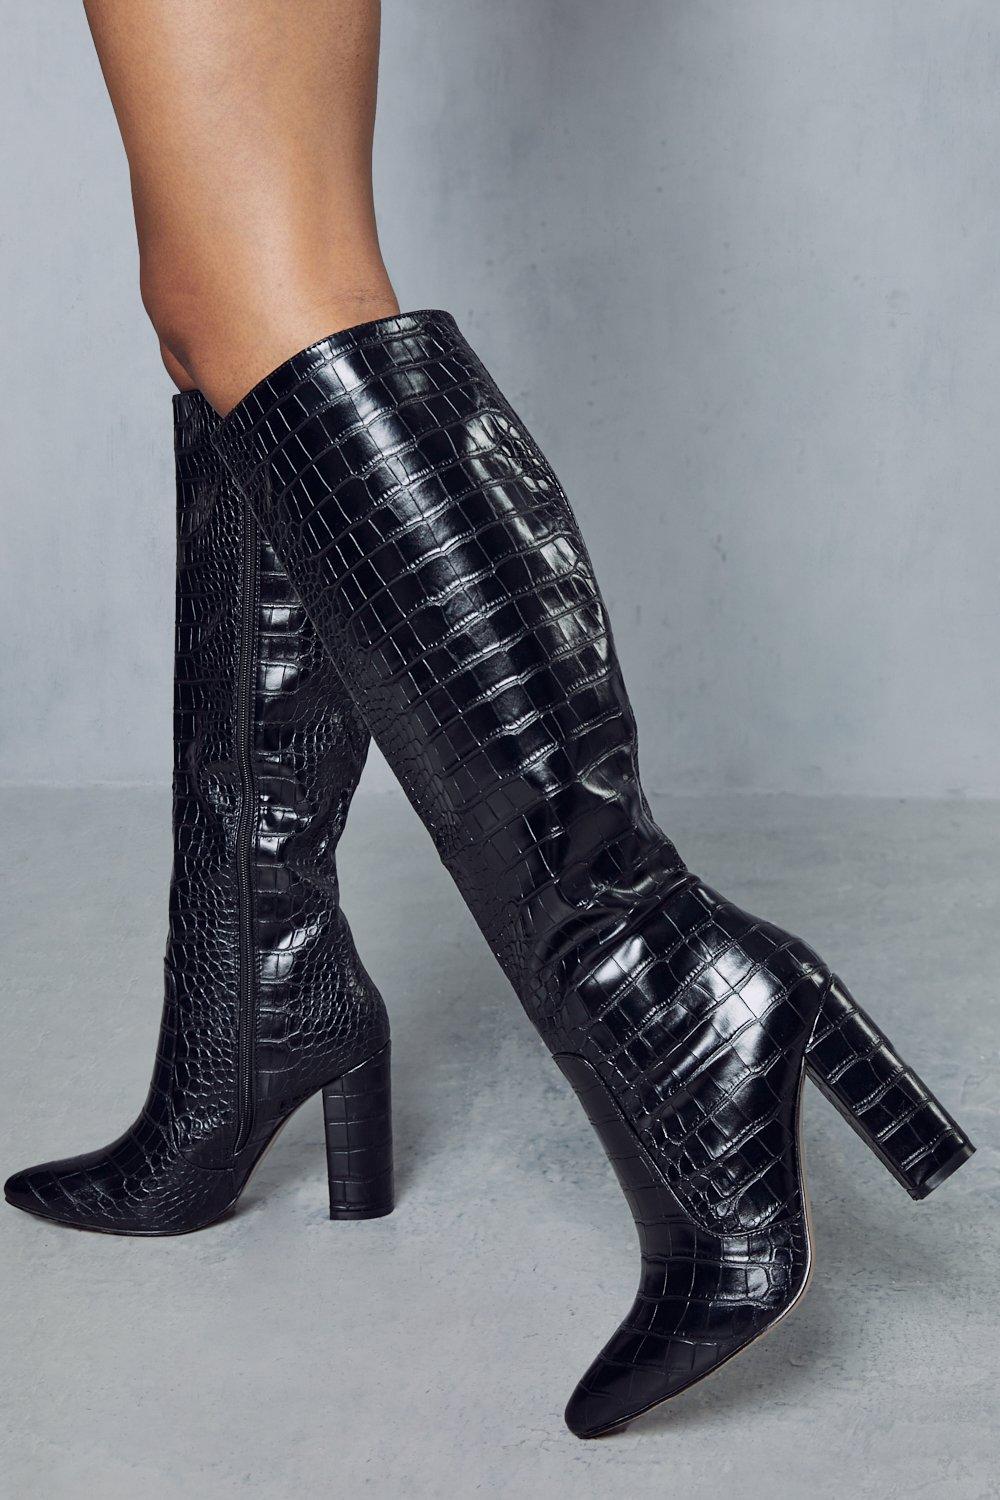 Womens Croc Knee High Heeled Boots - black - 6, Black